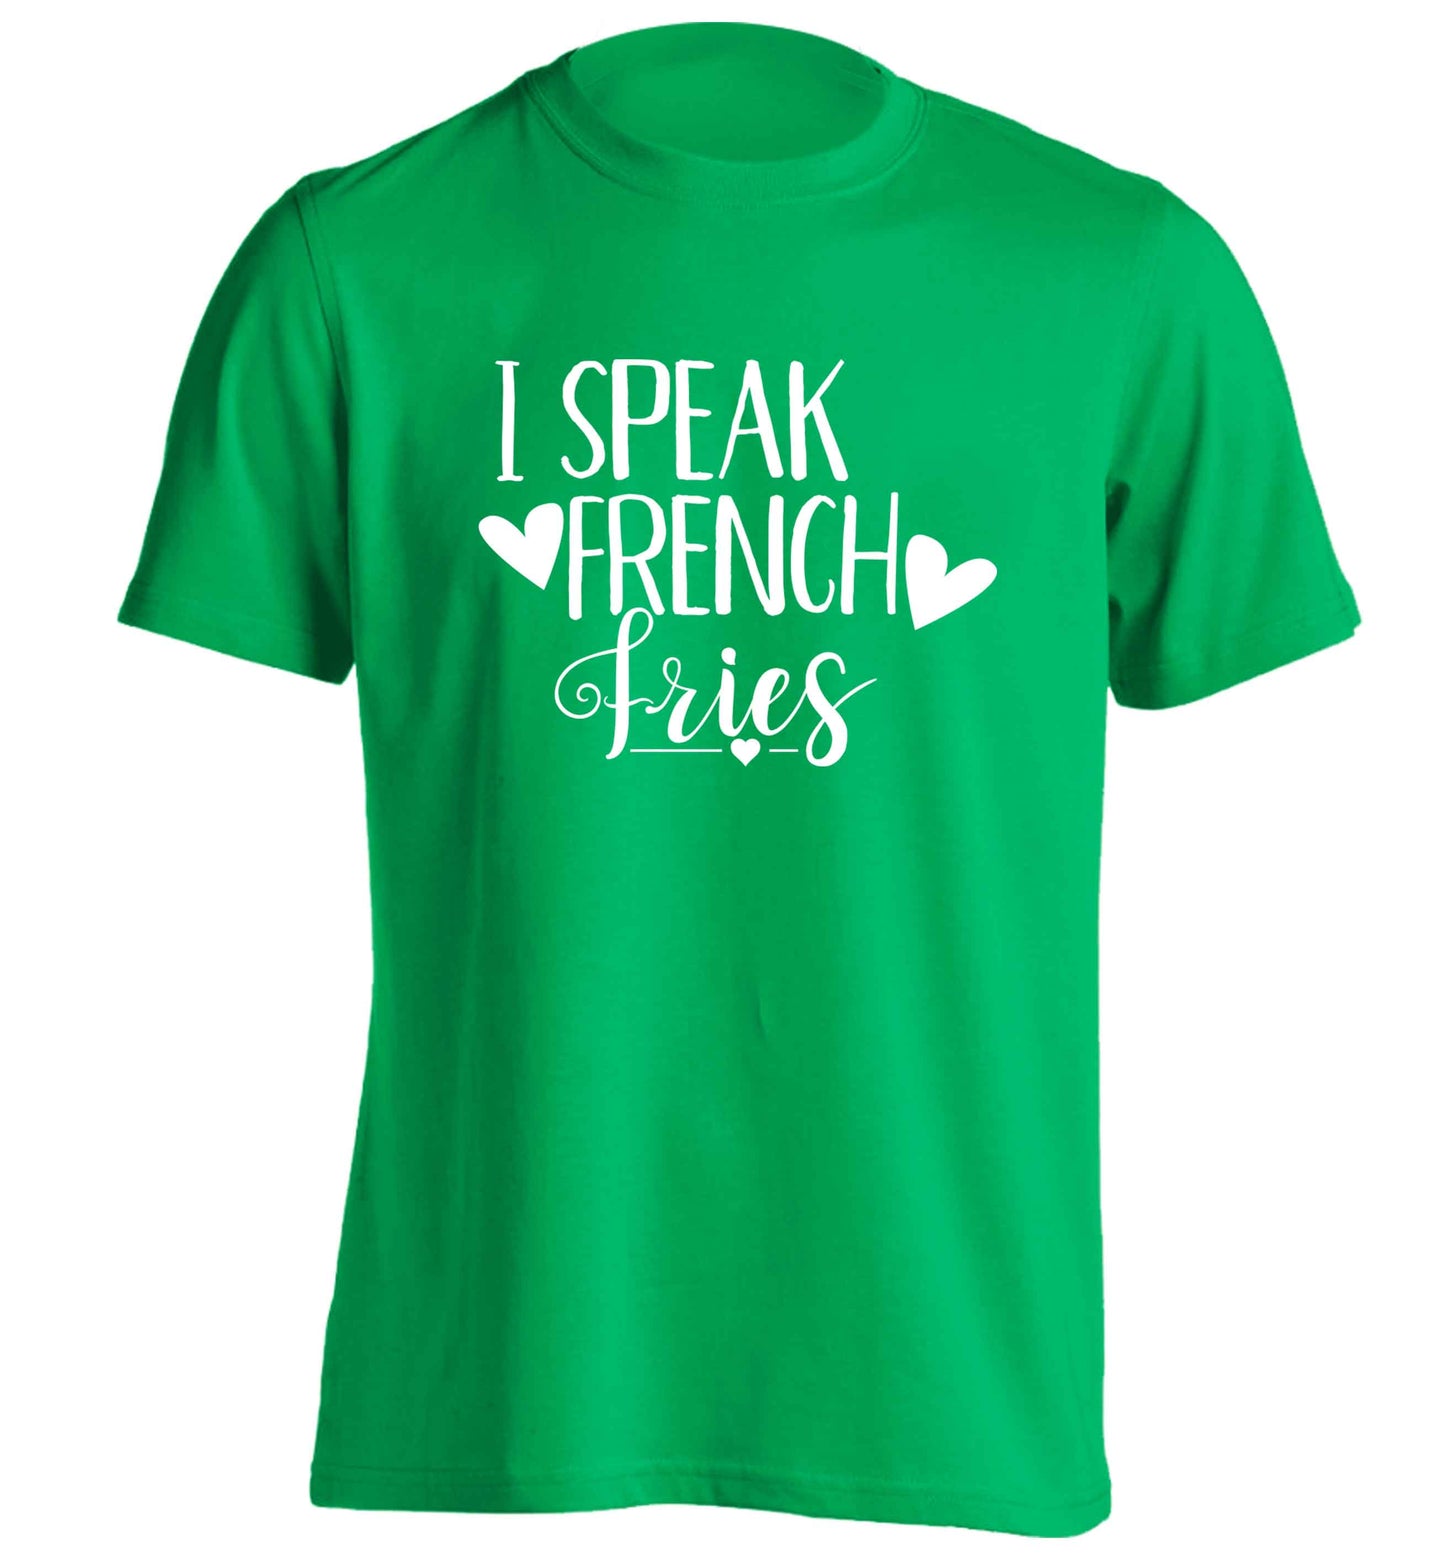 I speak French fries adults unisex green Tshirt 2XL